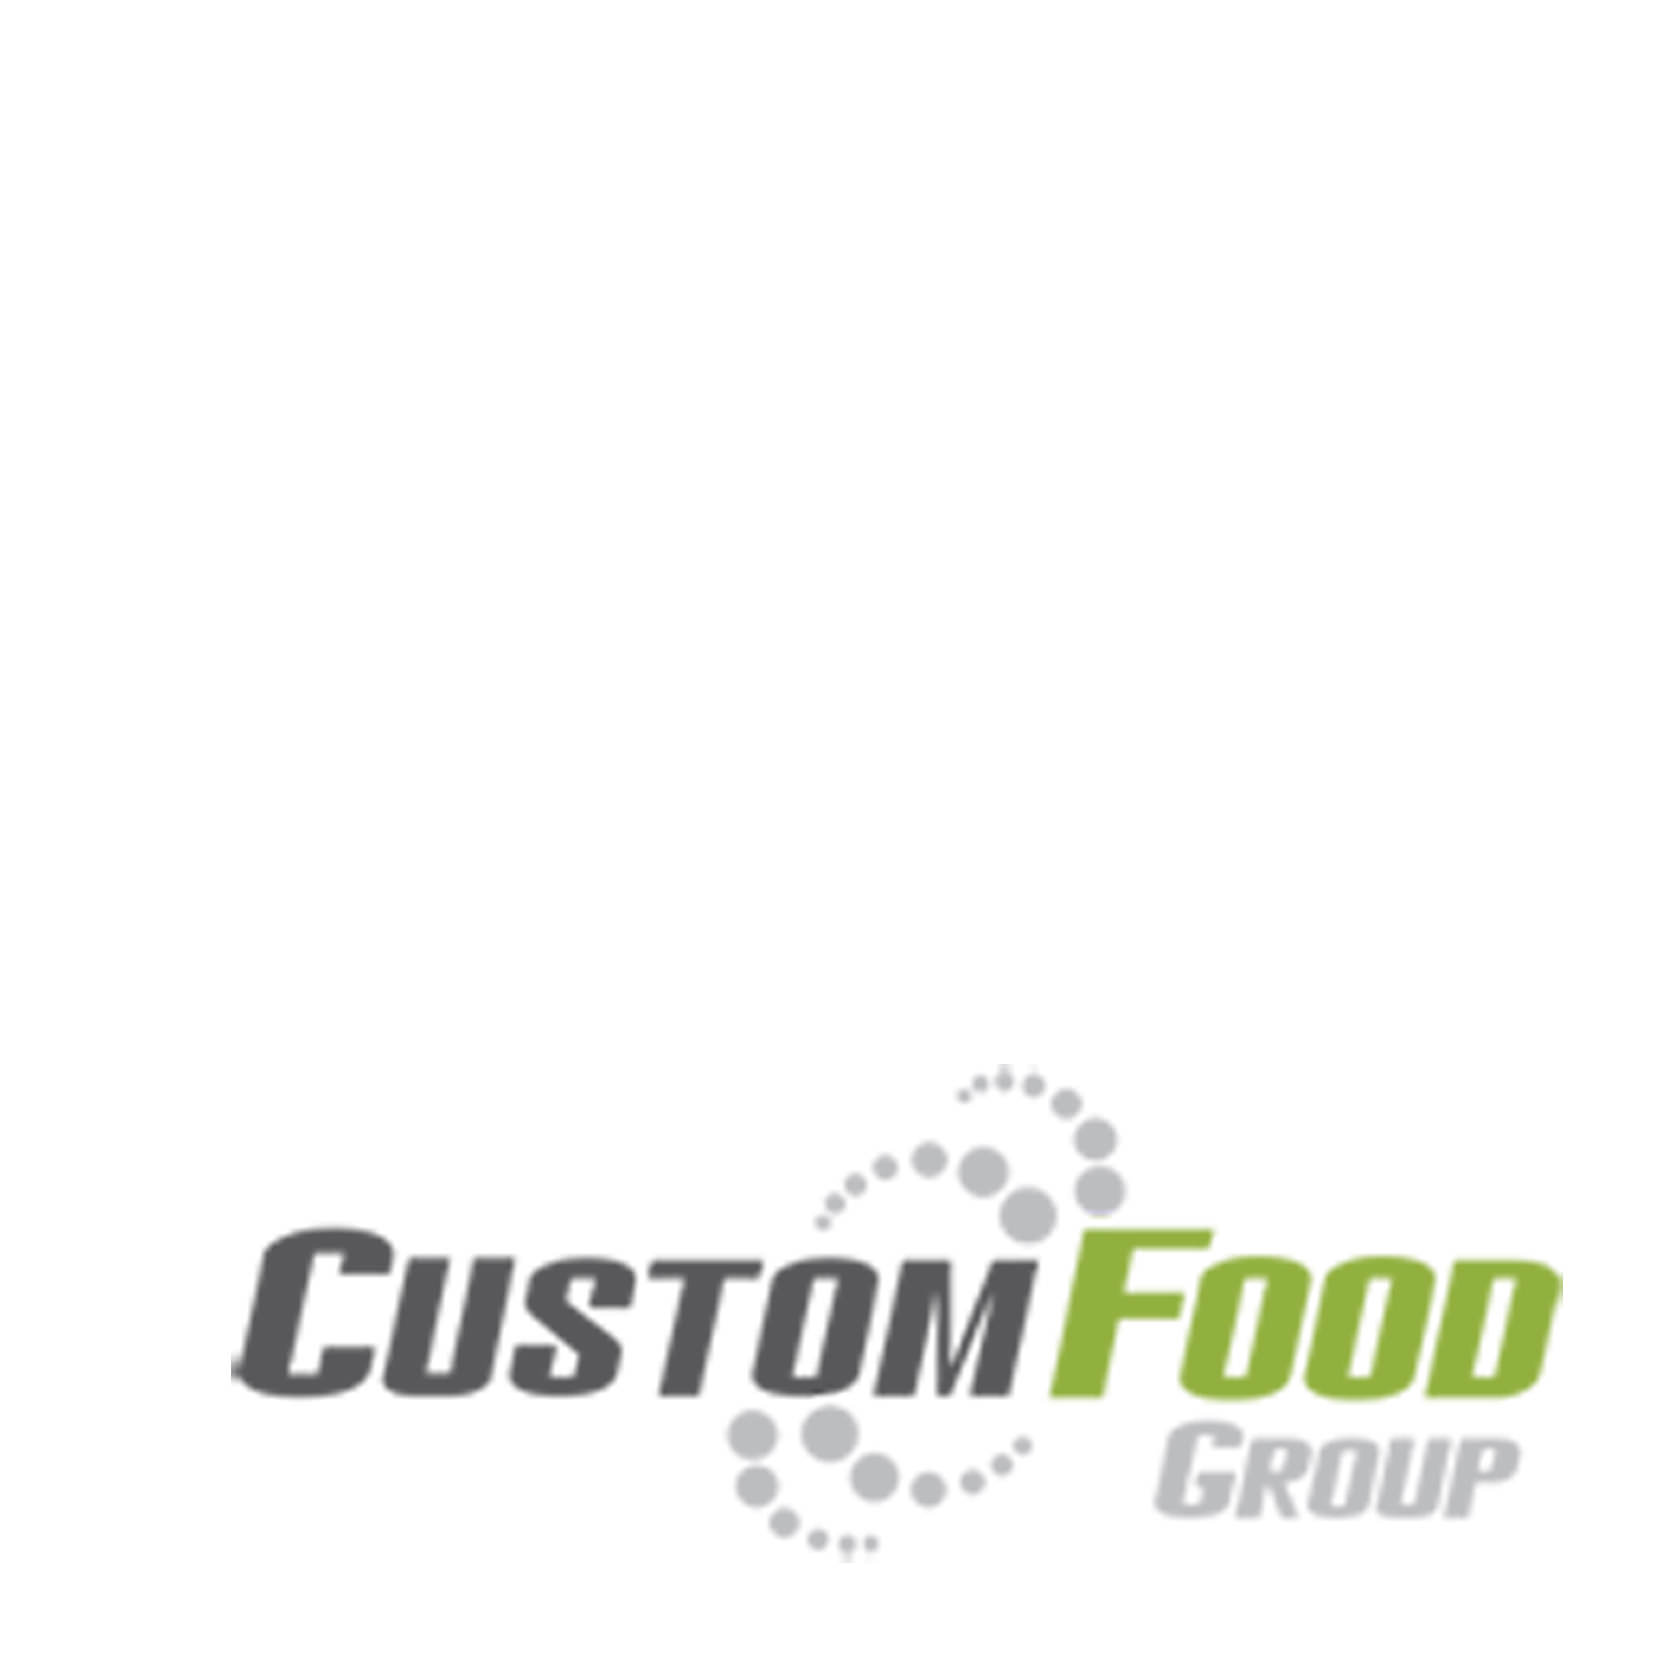 Custom Food Group